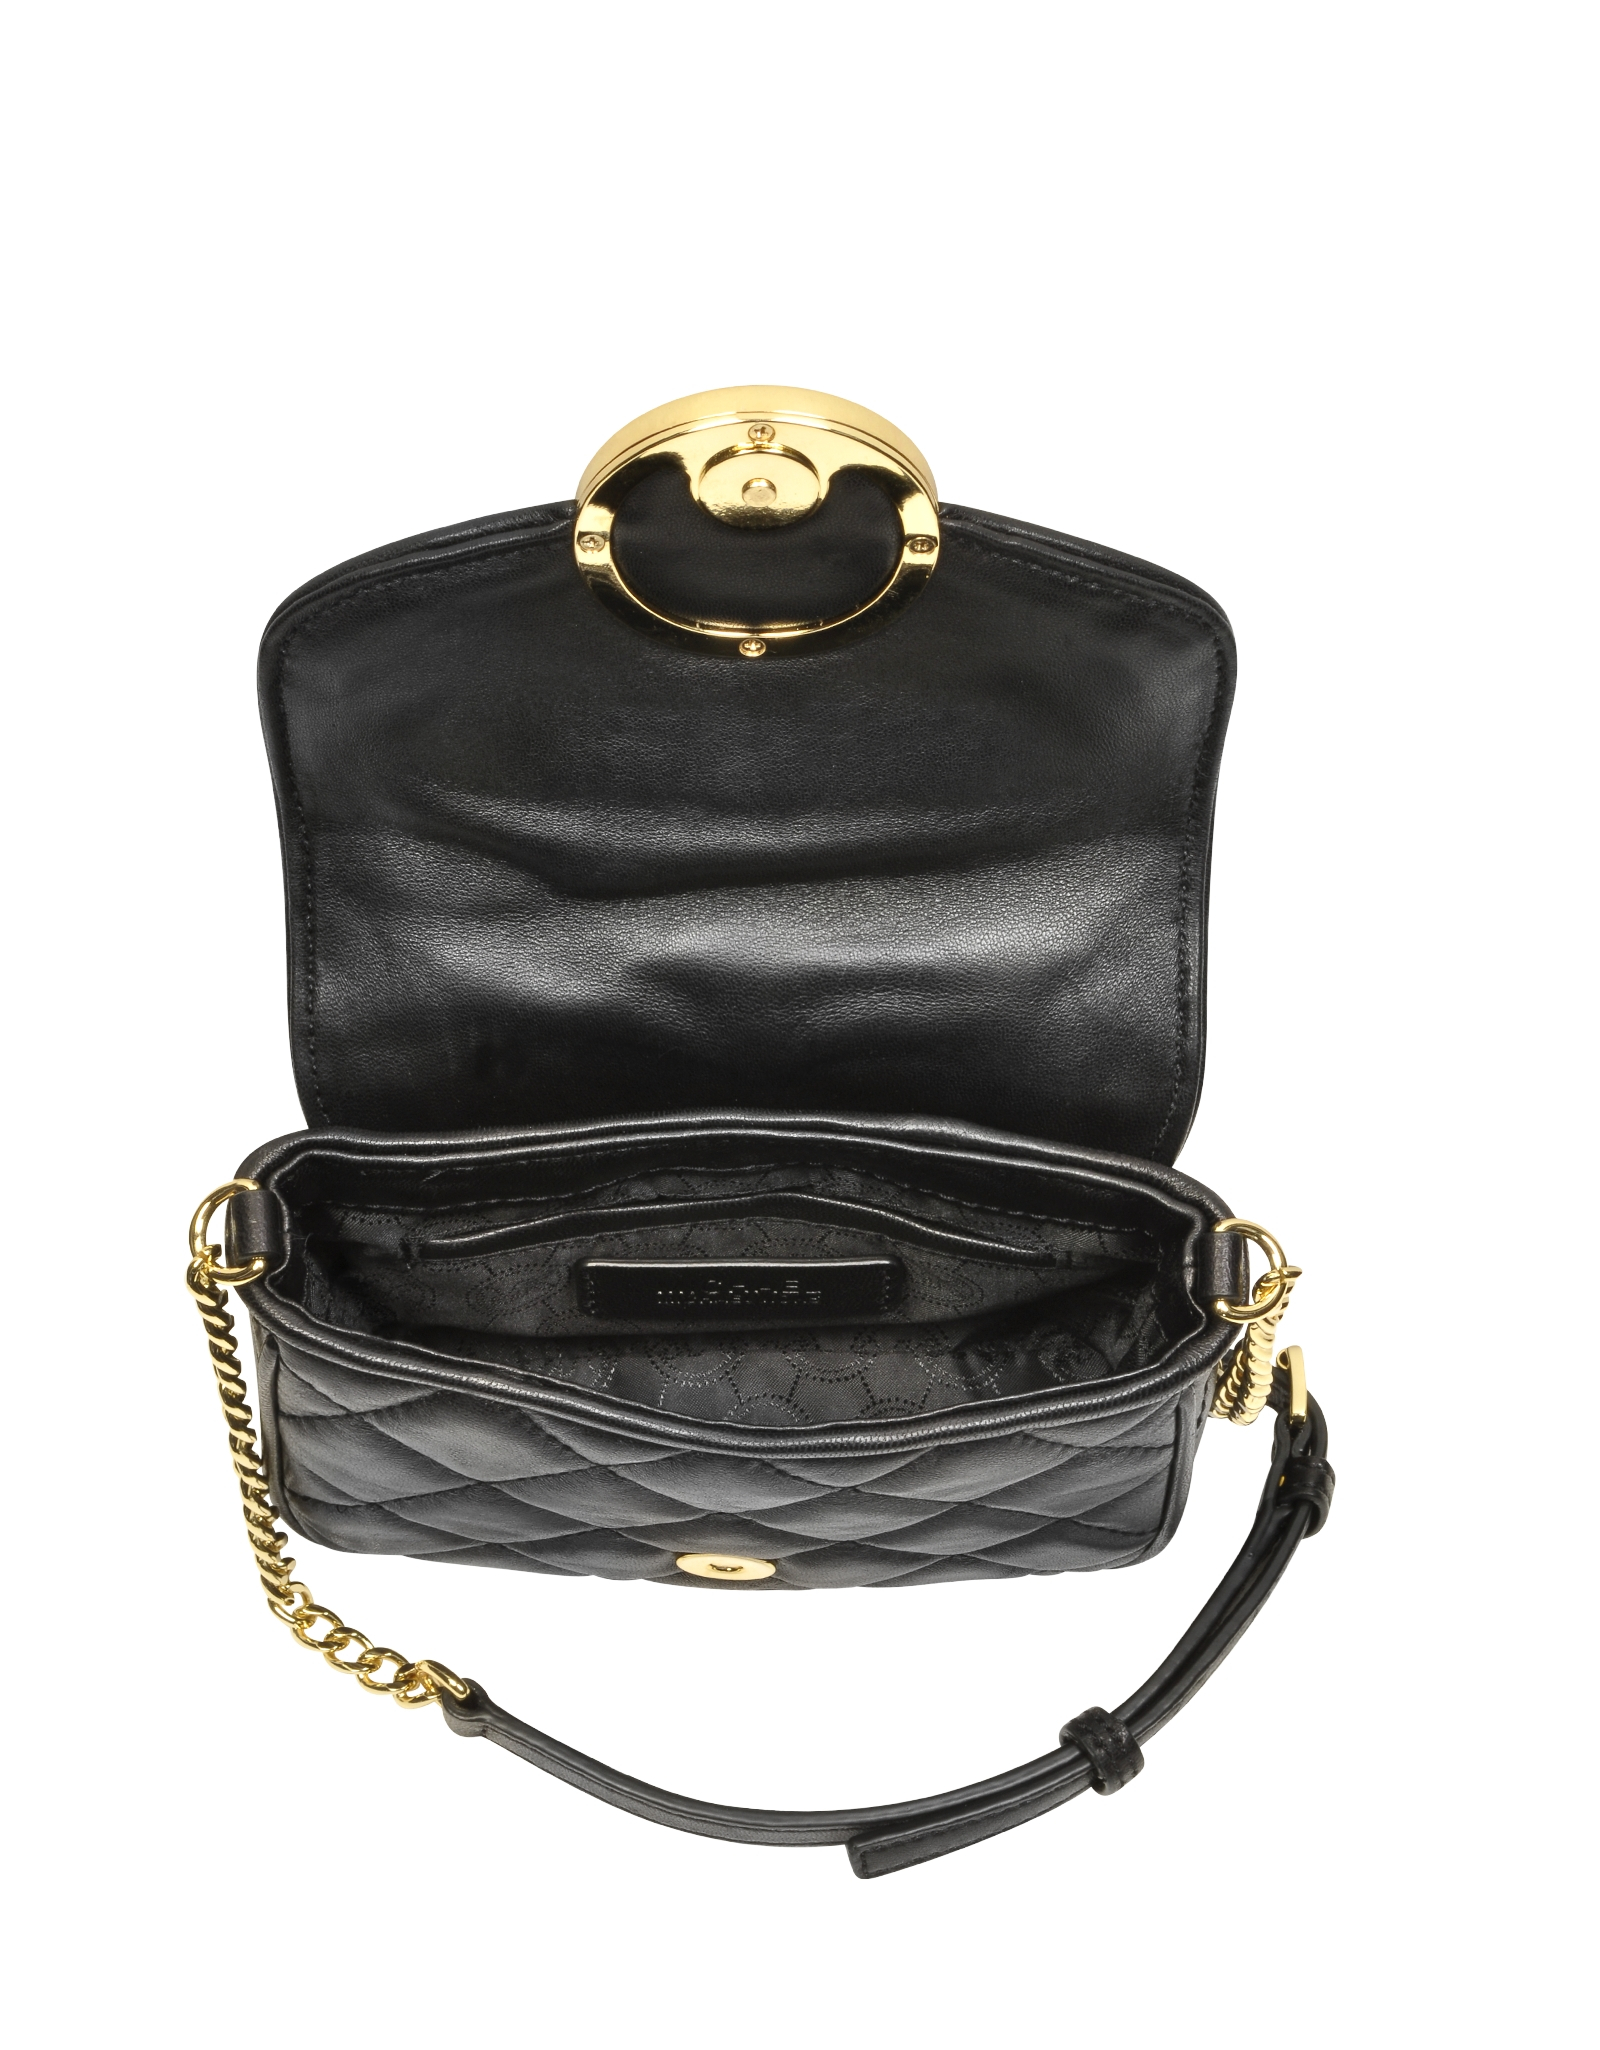 michael kors fulton handbag 2015